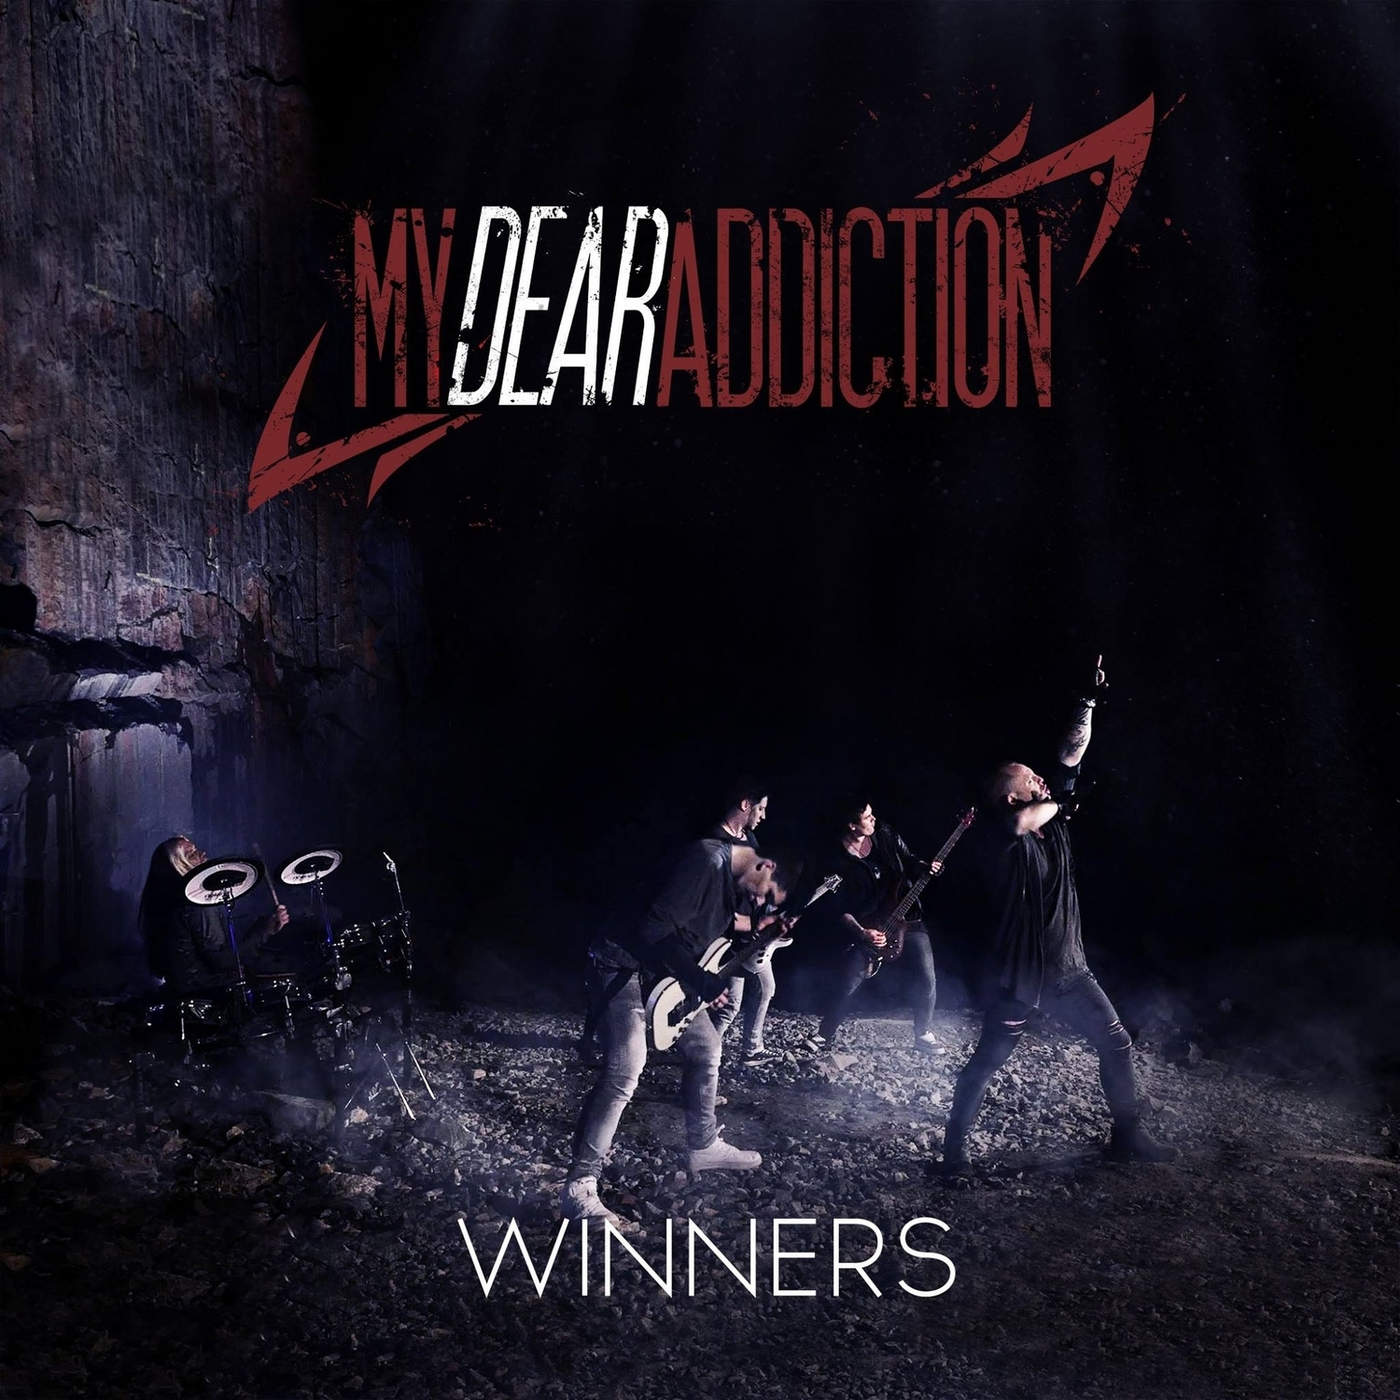 My Dear Addiction - Winners (Single) (2015) Album Info